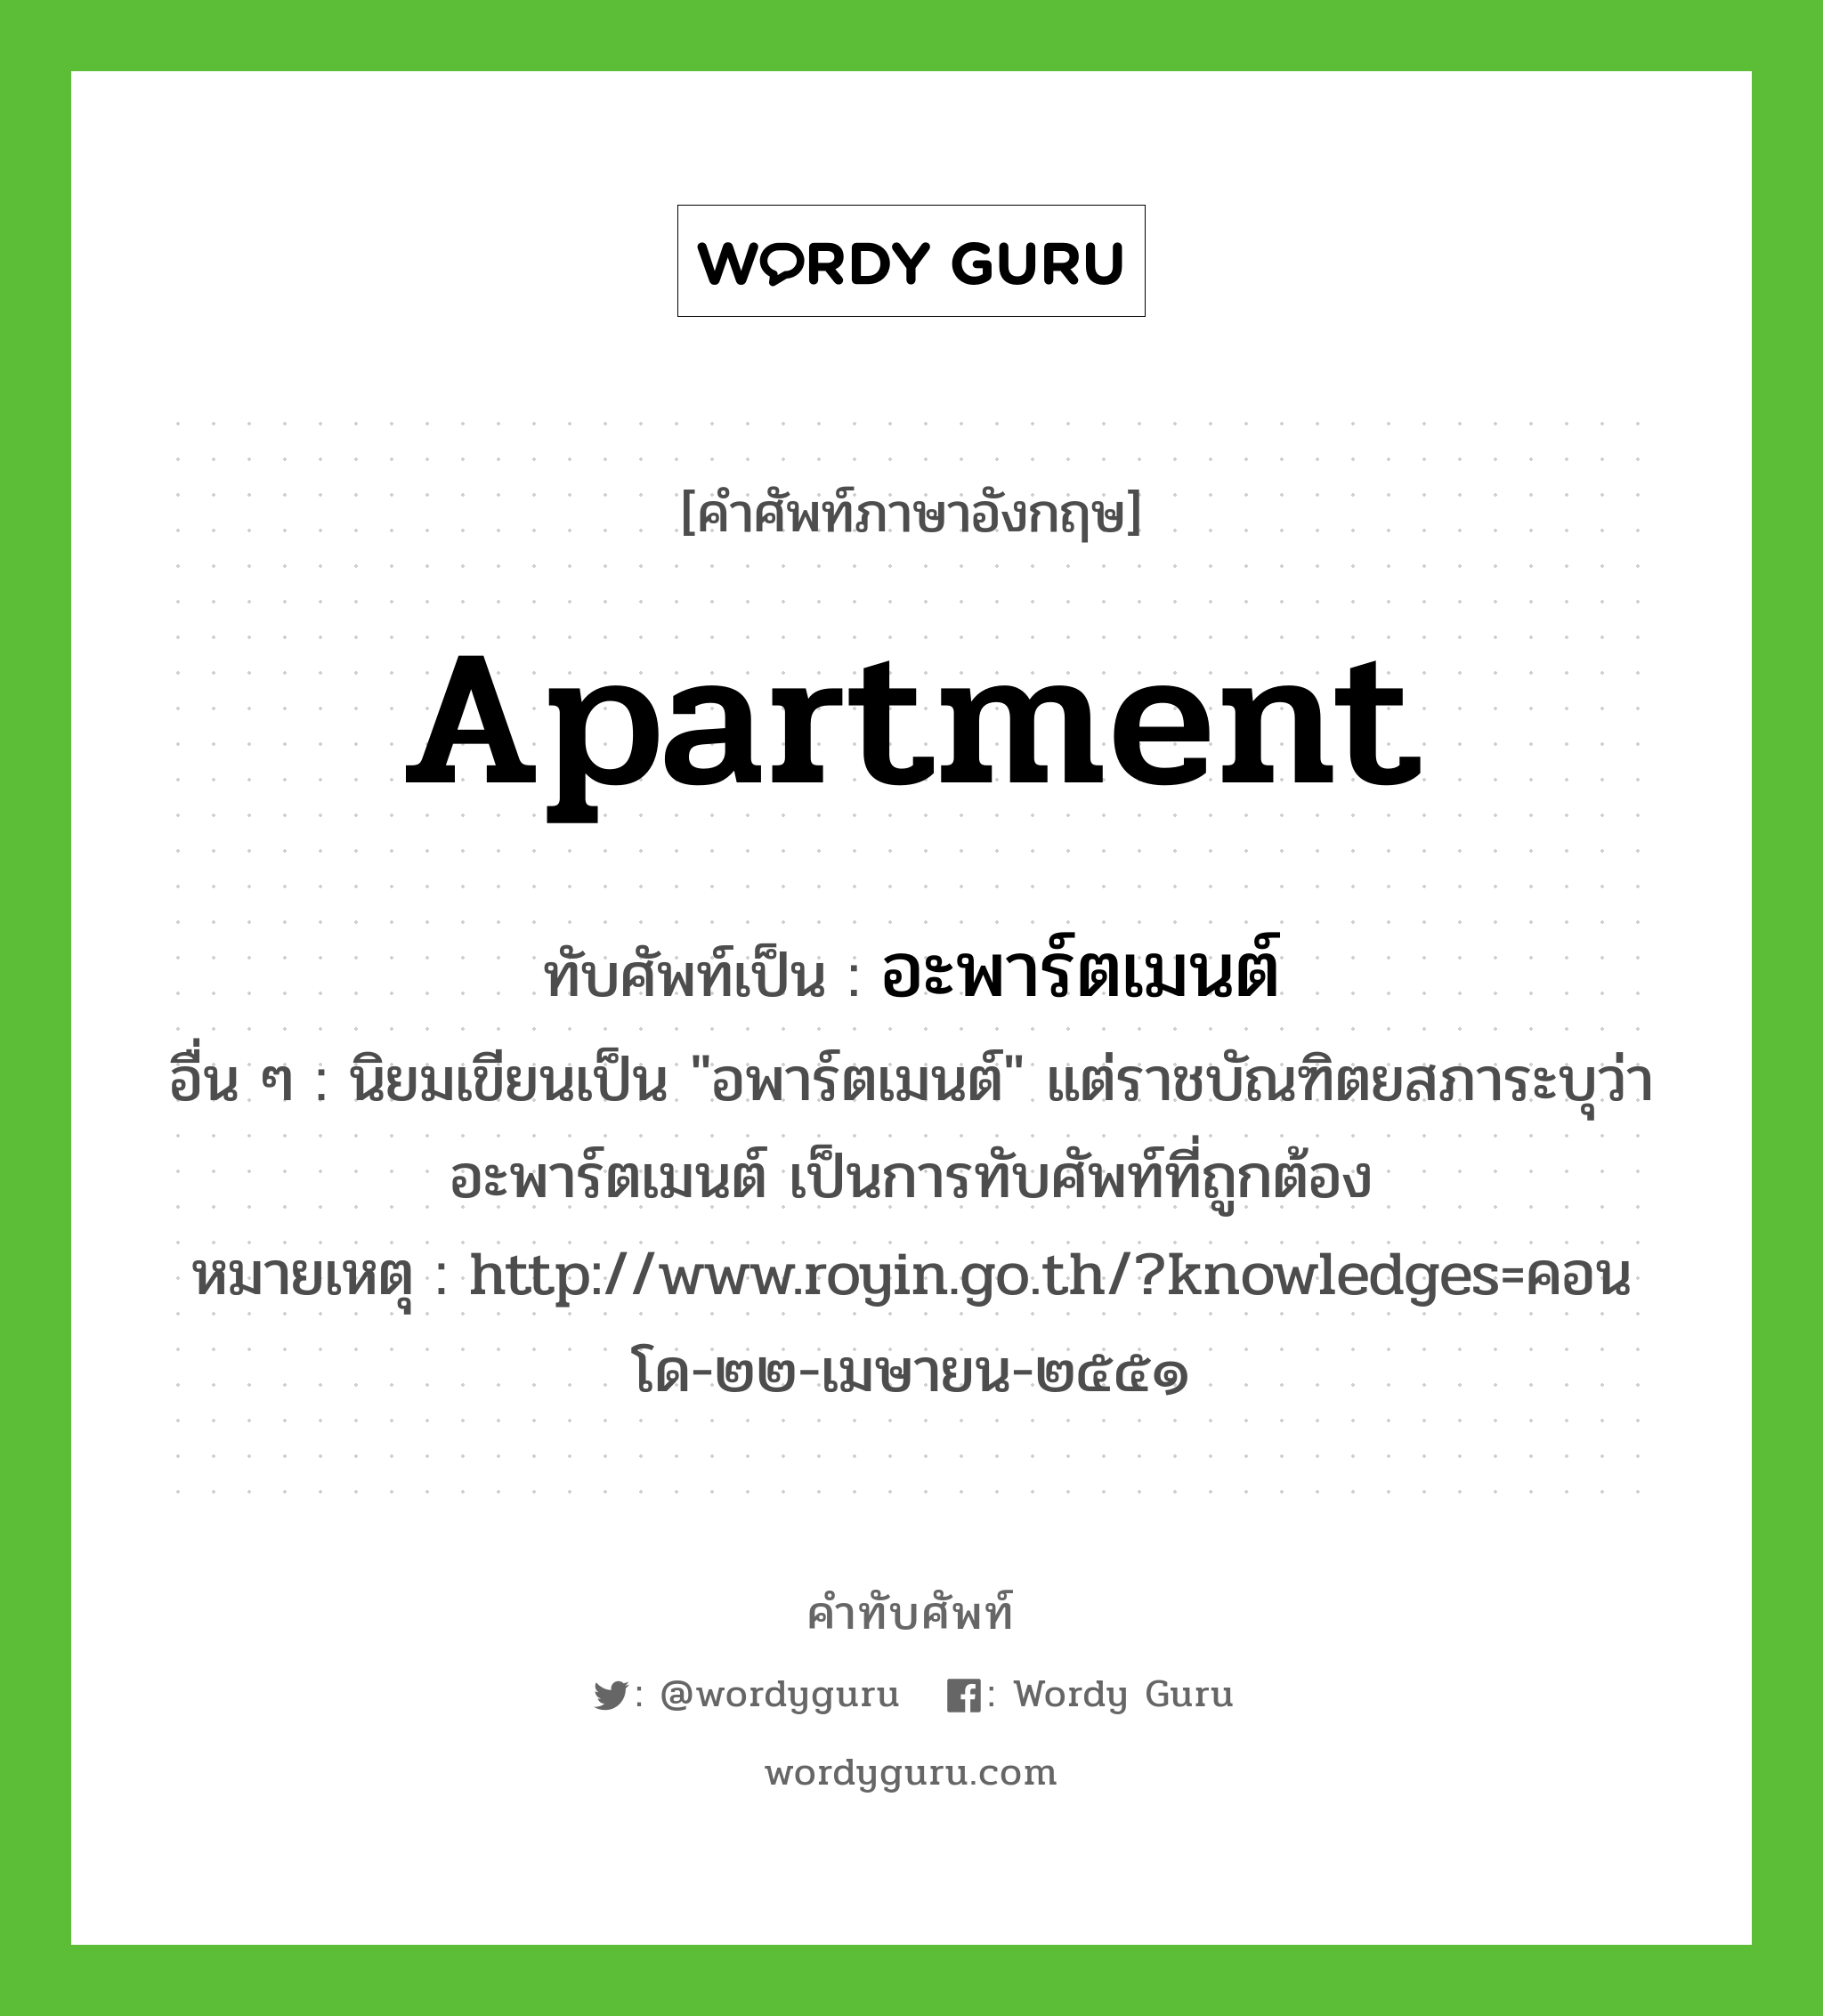 Apartment เขียนเป็นคำไทยว่าอะไร? | Wordy Guru